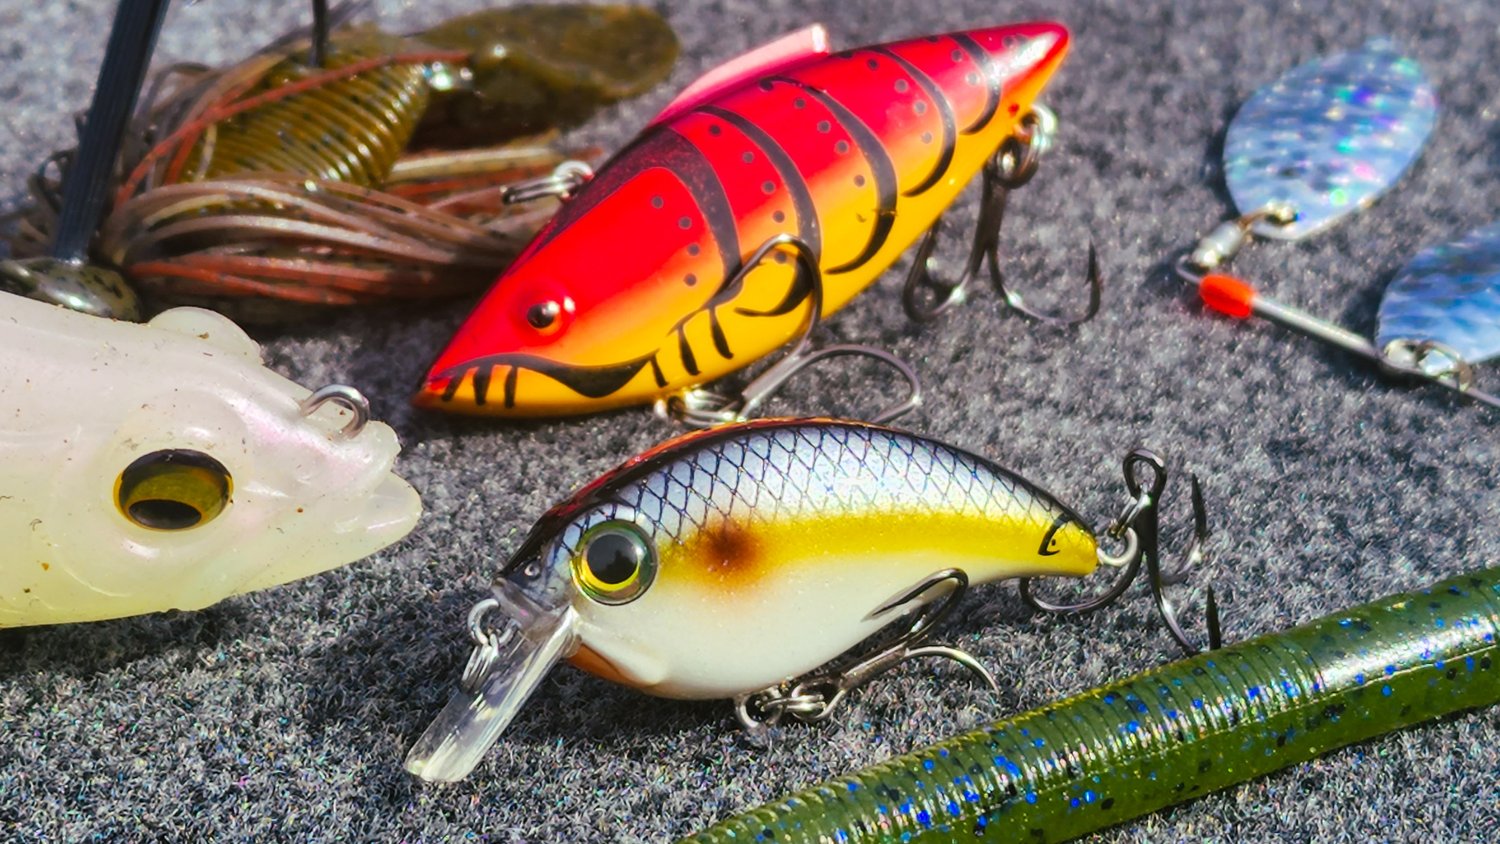 Spring Time Killer. Our SB5 in Crawfish color #fishing #bassfishing  #fishinglife #fishingtrip #fishingislife #kayakfishing #fishingdai